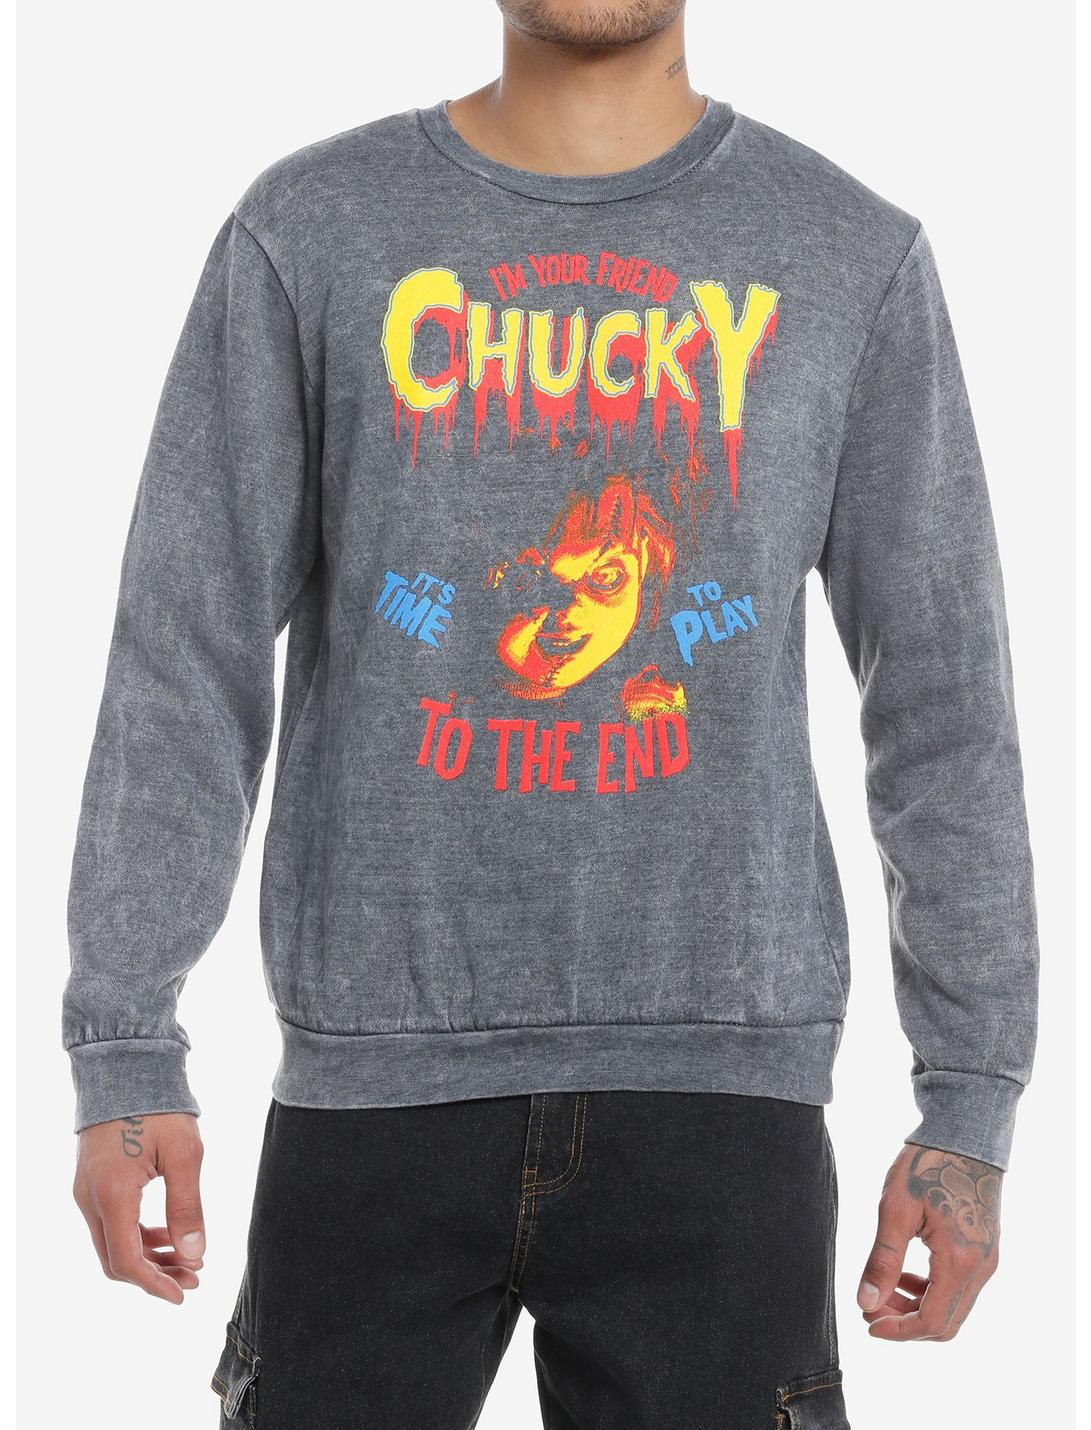 Chucky I'm Your Friend Sweatshirt, CHARCOAL, hi-res